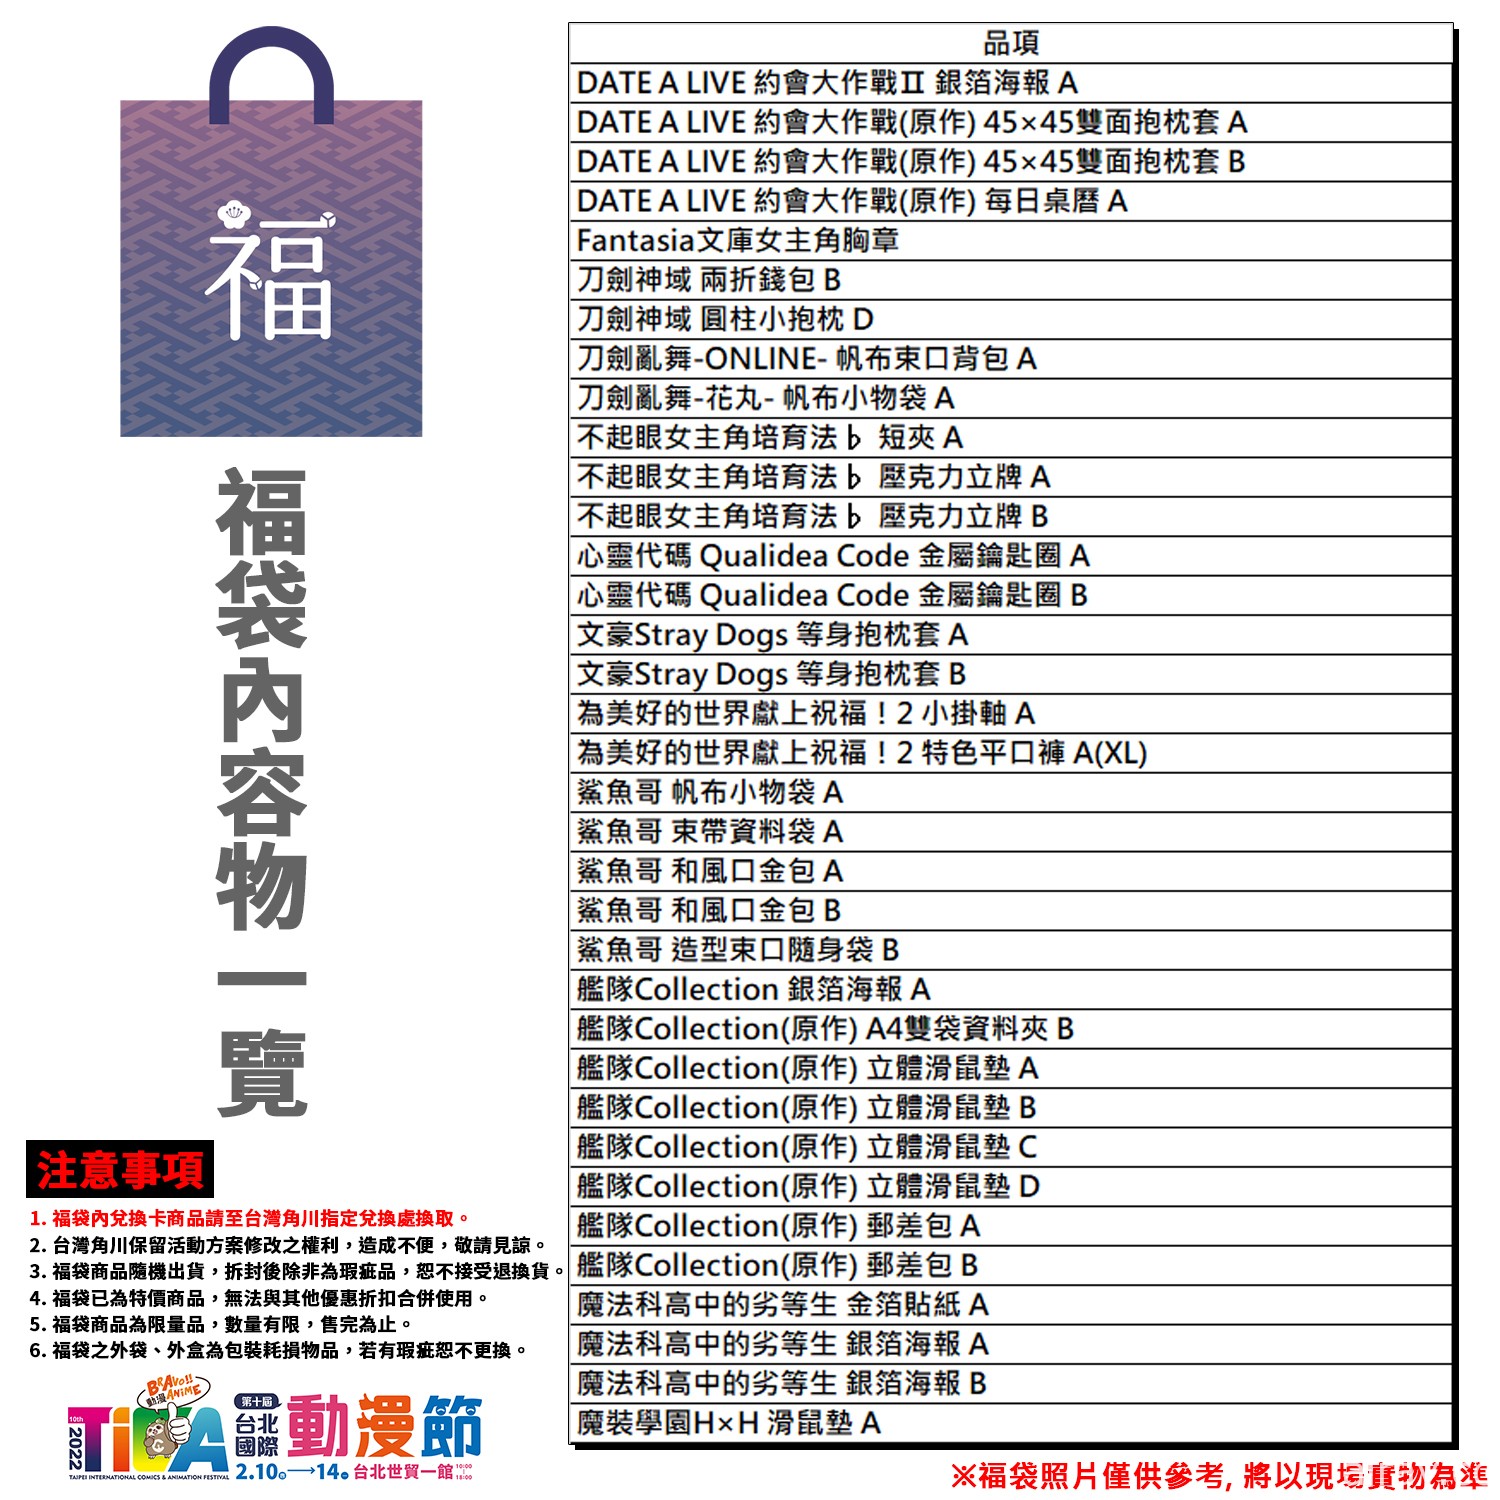 【TiCA22】台灣角川公開展場優惠以及線上動漫節相關資訊